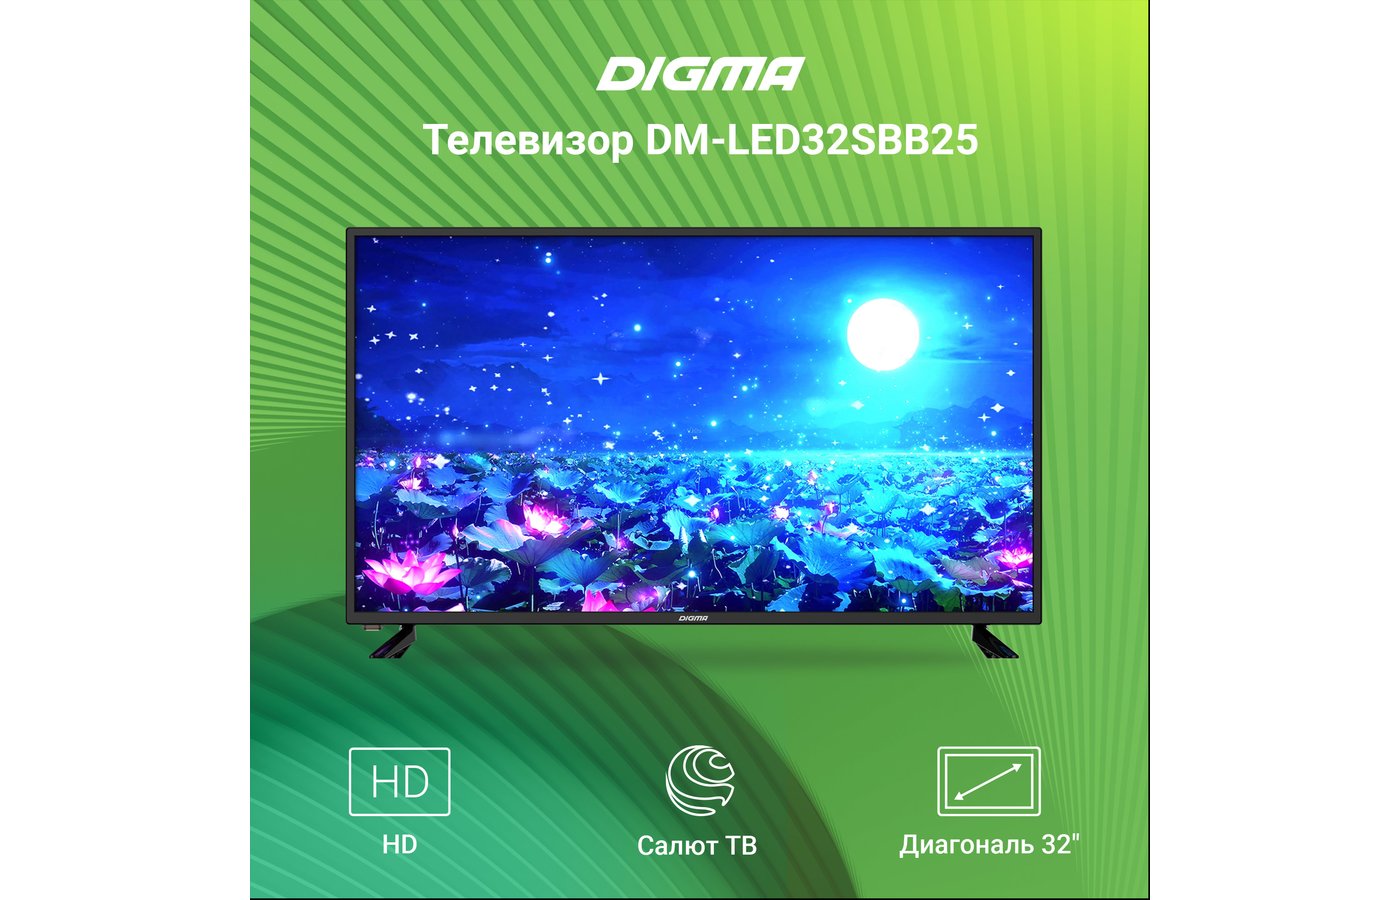 Digma DM-led40sbb25 led. Телевизор Digma DM led32sbb25. 40" Телевизор Digma DM-led40mq11. DM-led40sbb25 характеристики.